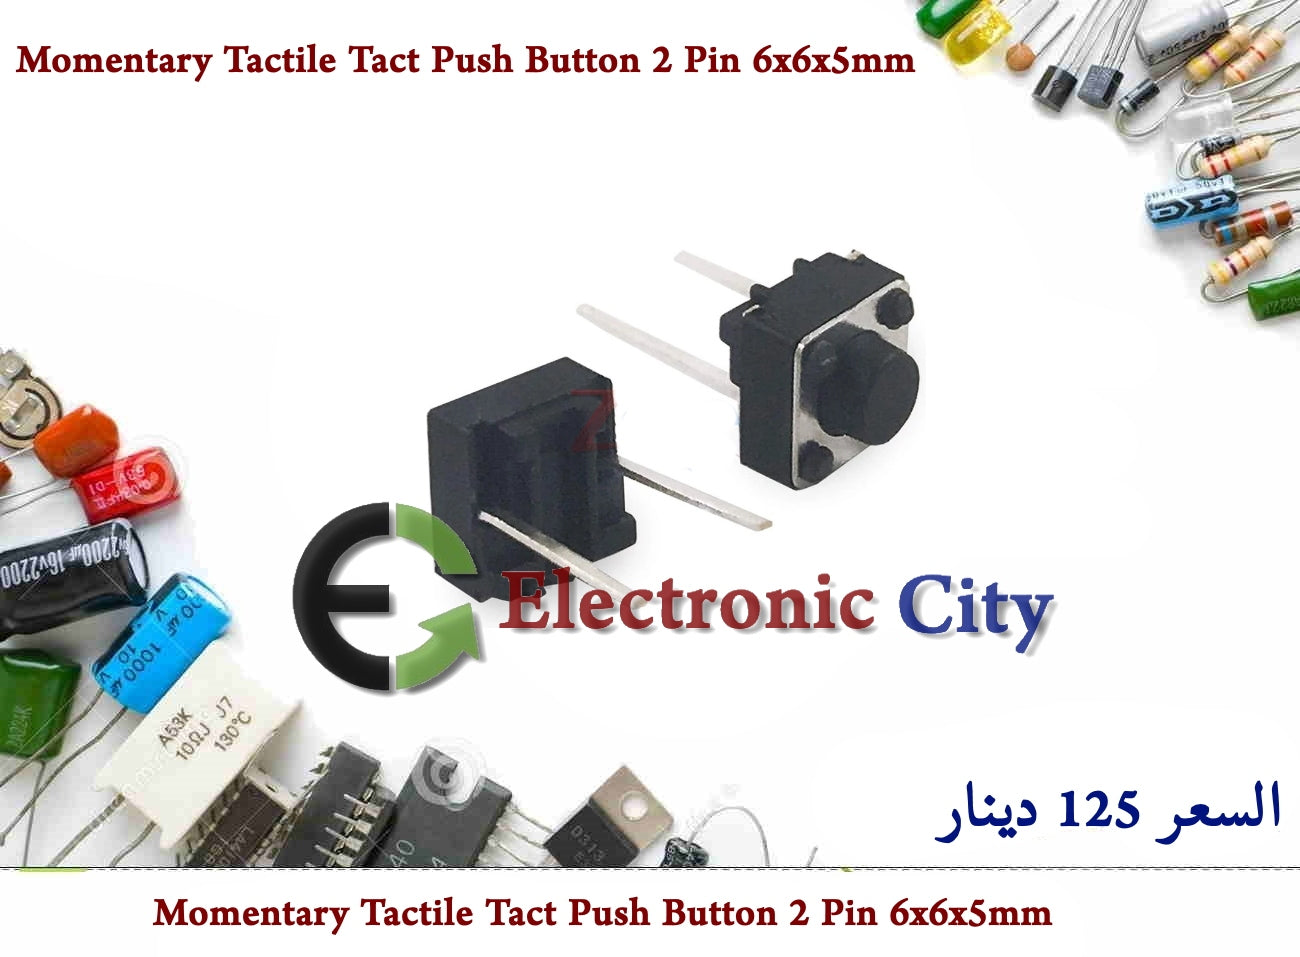 Momentary Tactile Tact Push Button 2 Pin 6x6x5mm